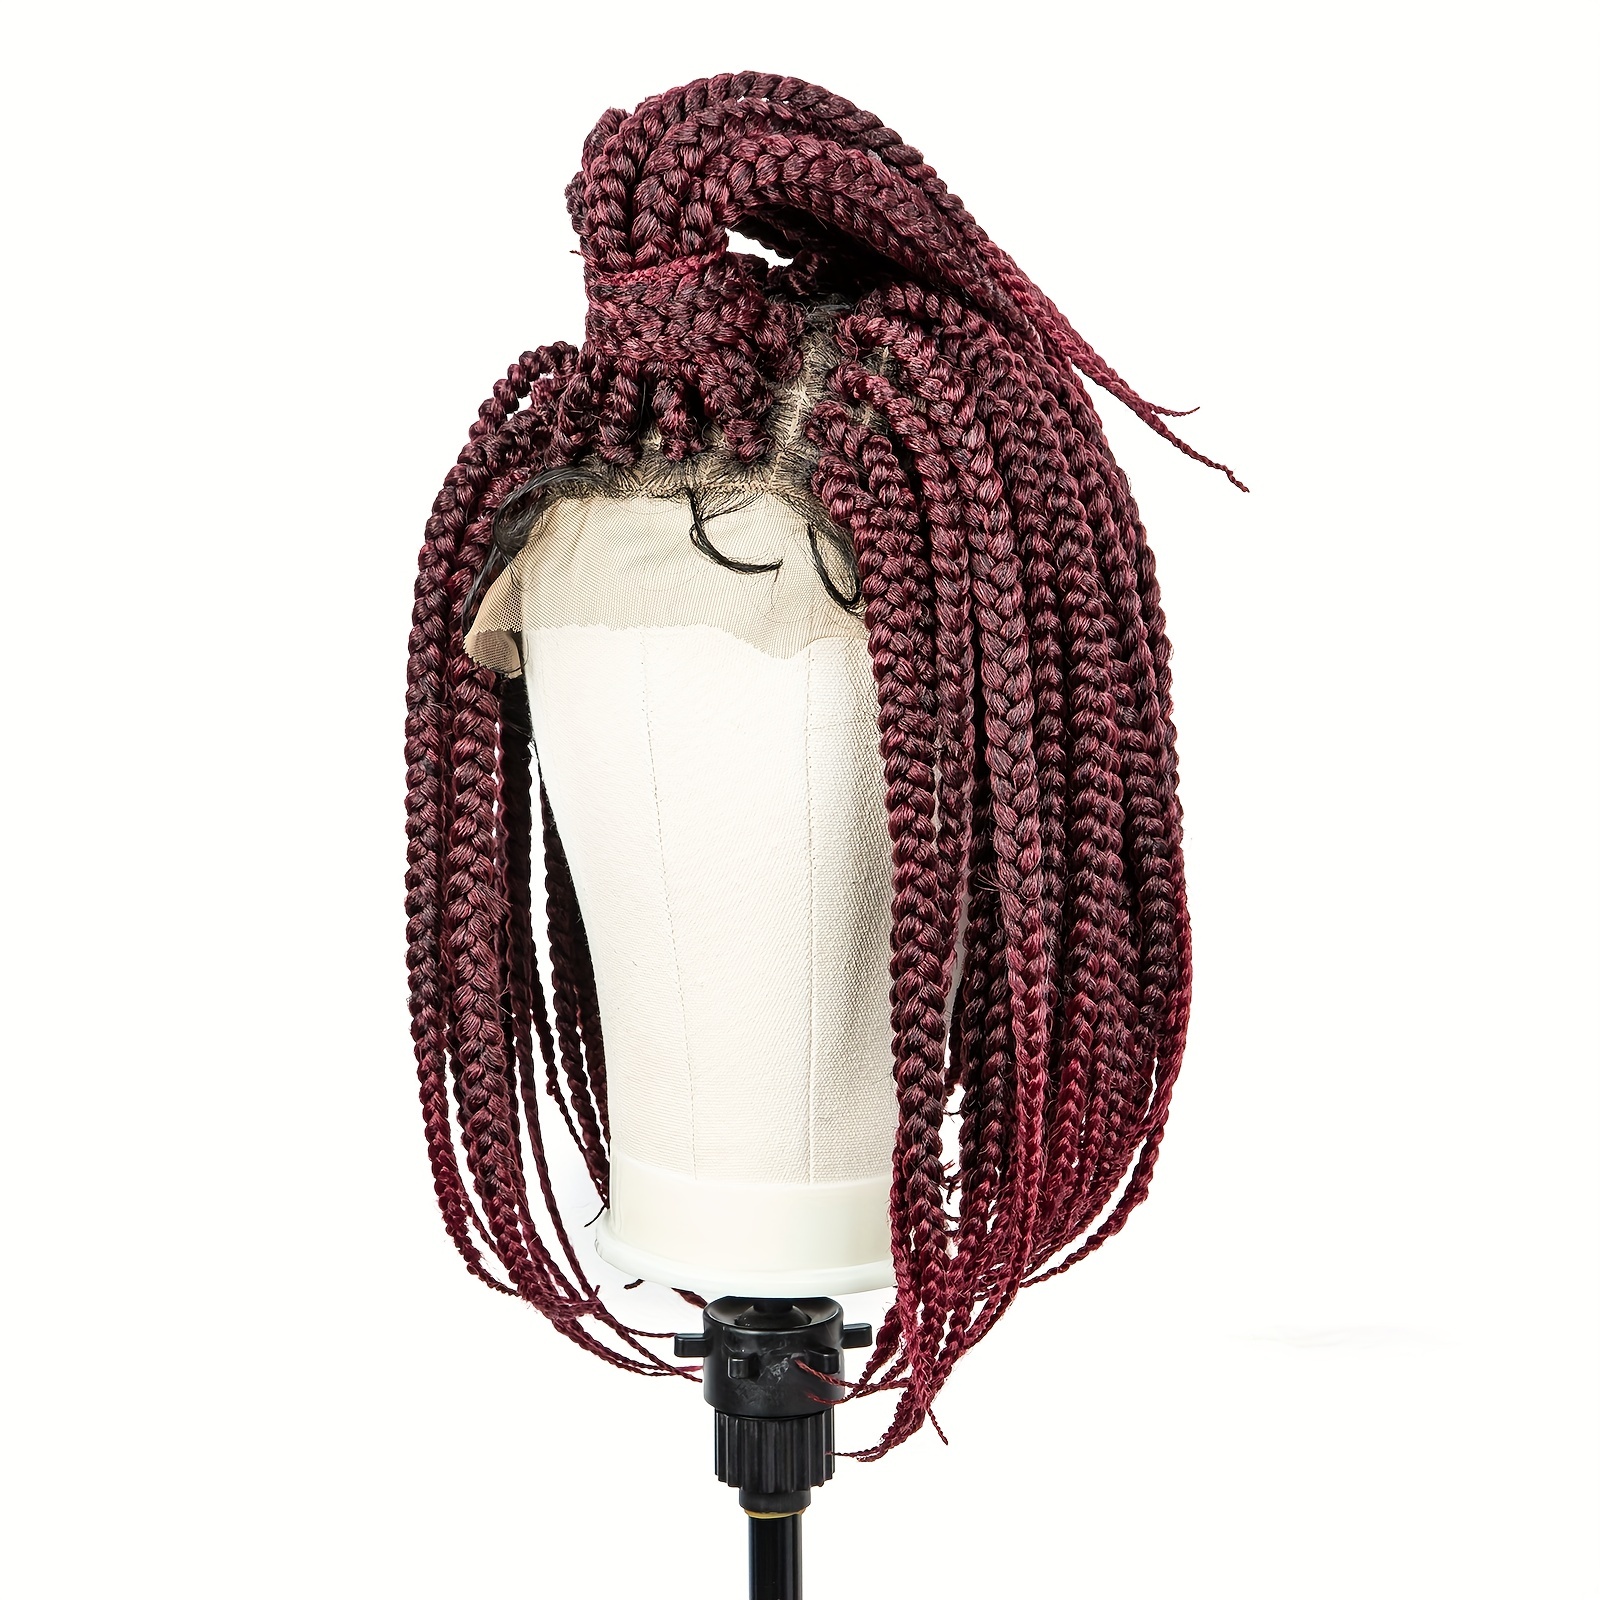 Top Cornrows C Cut Braid Wig Fulani Feedin Braided Box Braids Lace Front Wig  Color Burgundy Red 22 Inches 